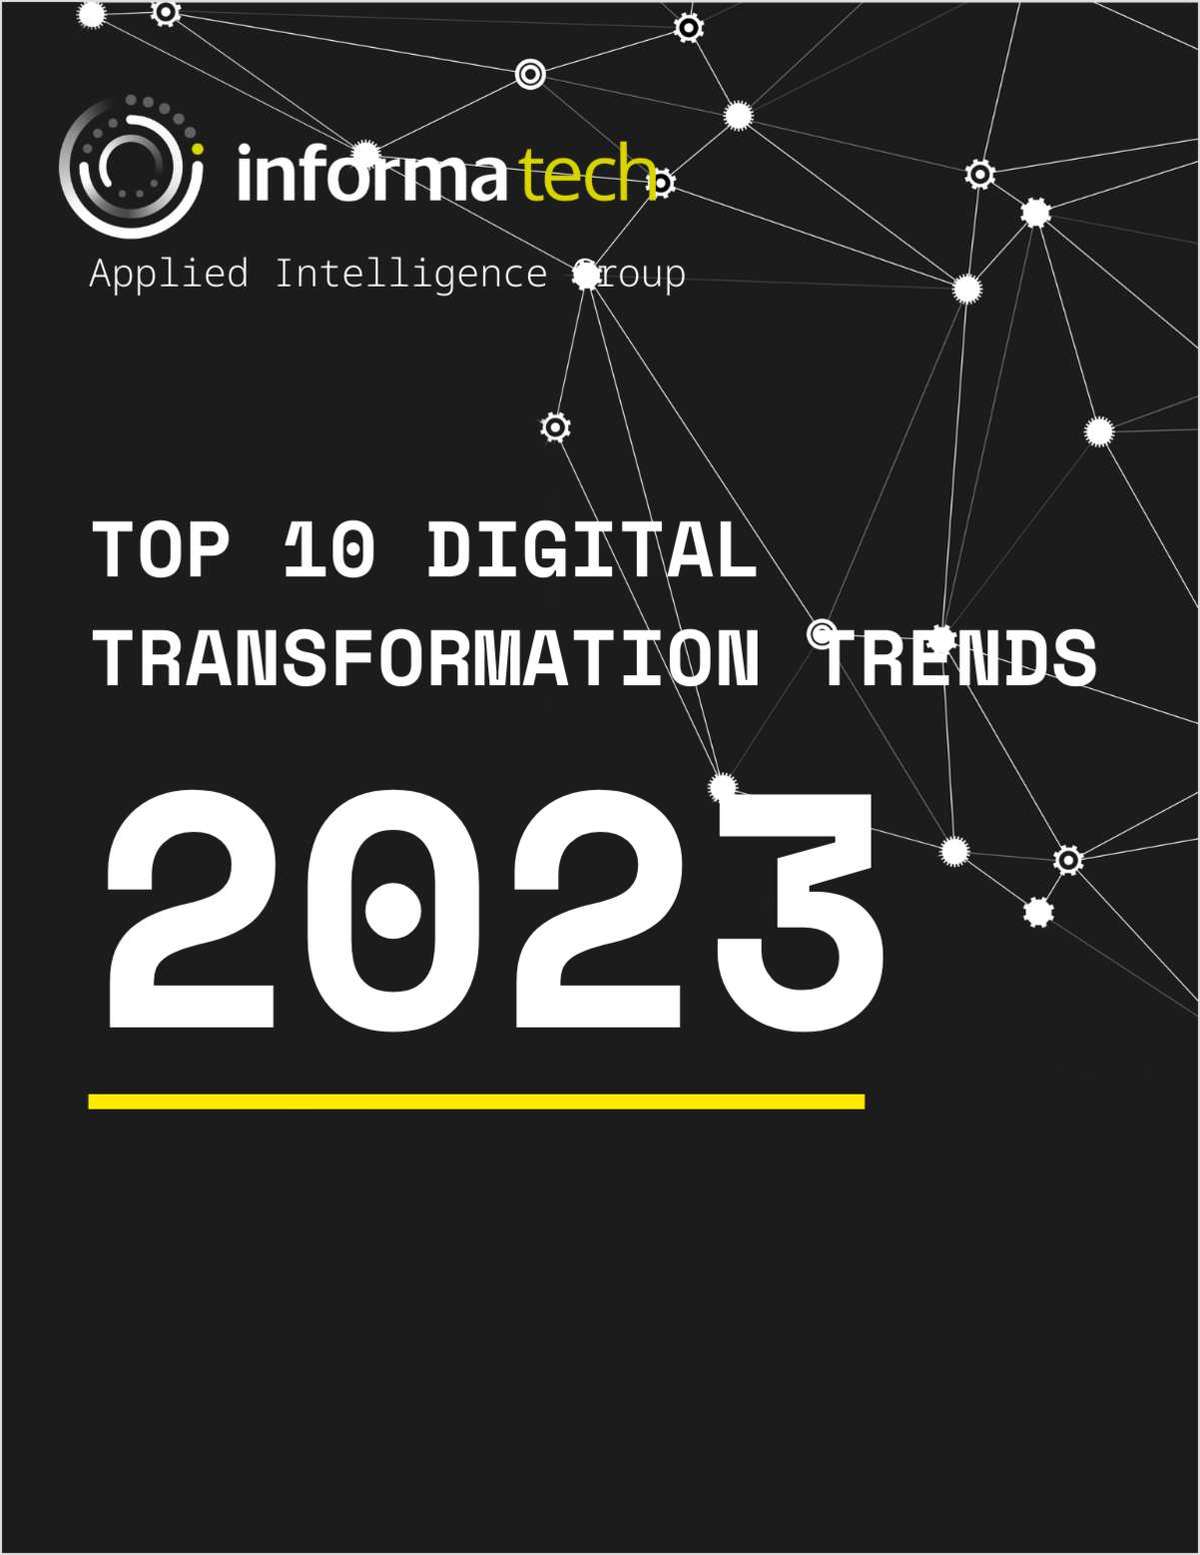 Top 10 Digital Transformation Trends 2023